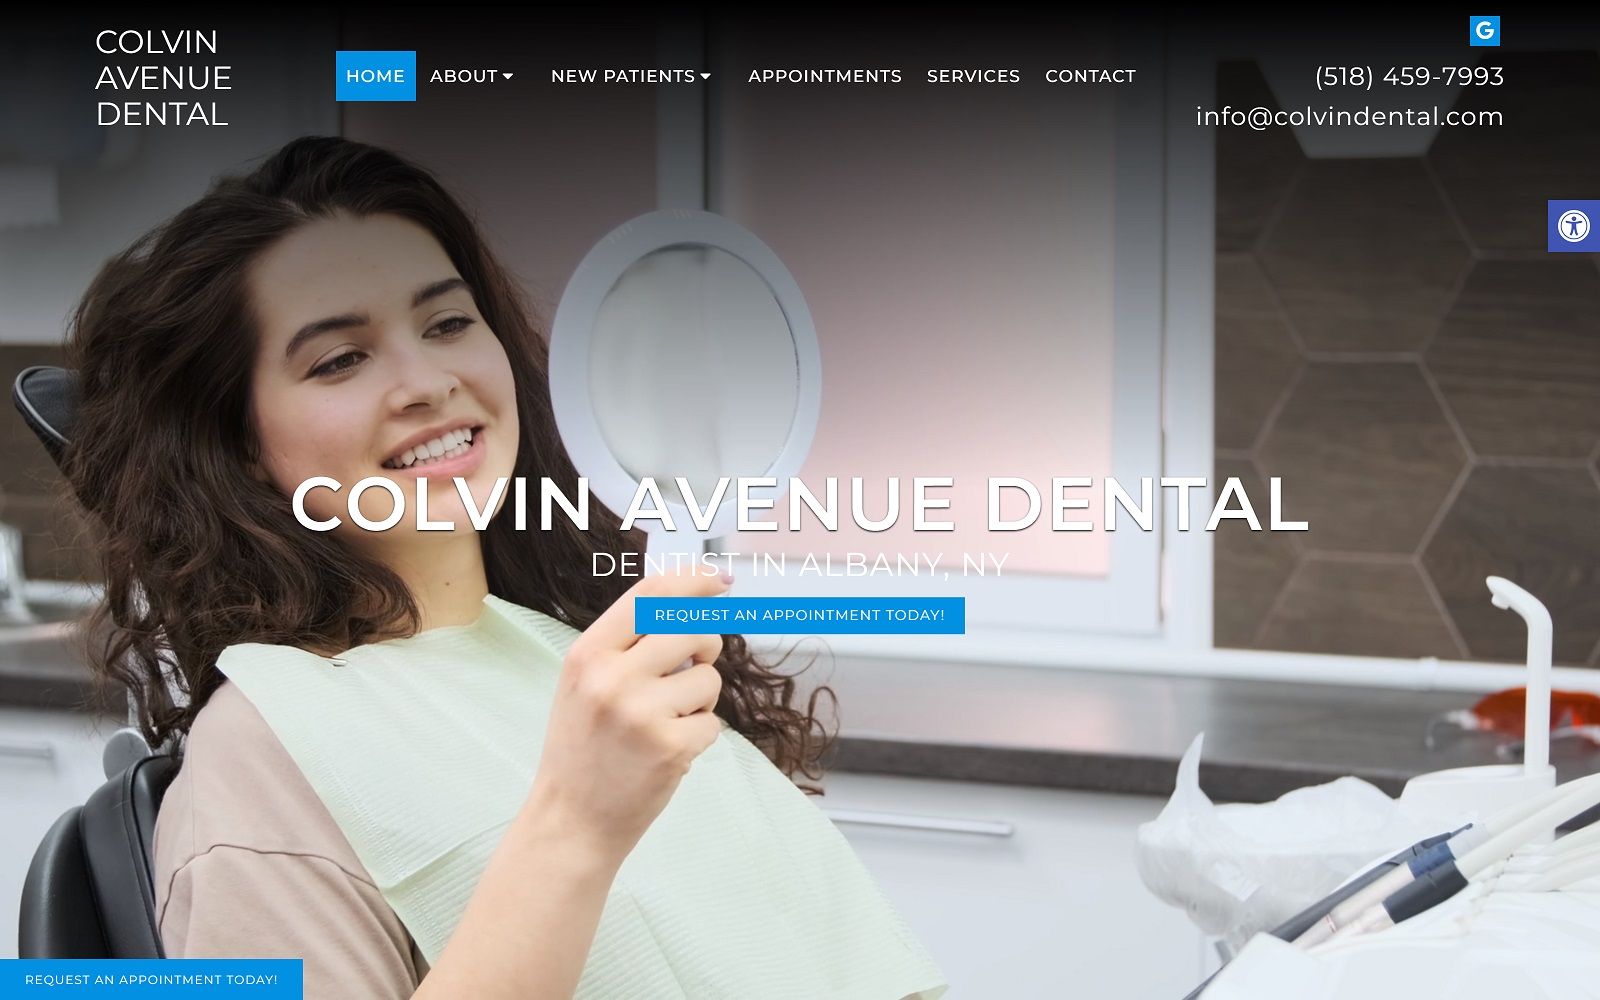 The screenshot of colvin avenue dental colvinavenuedental. Com website